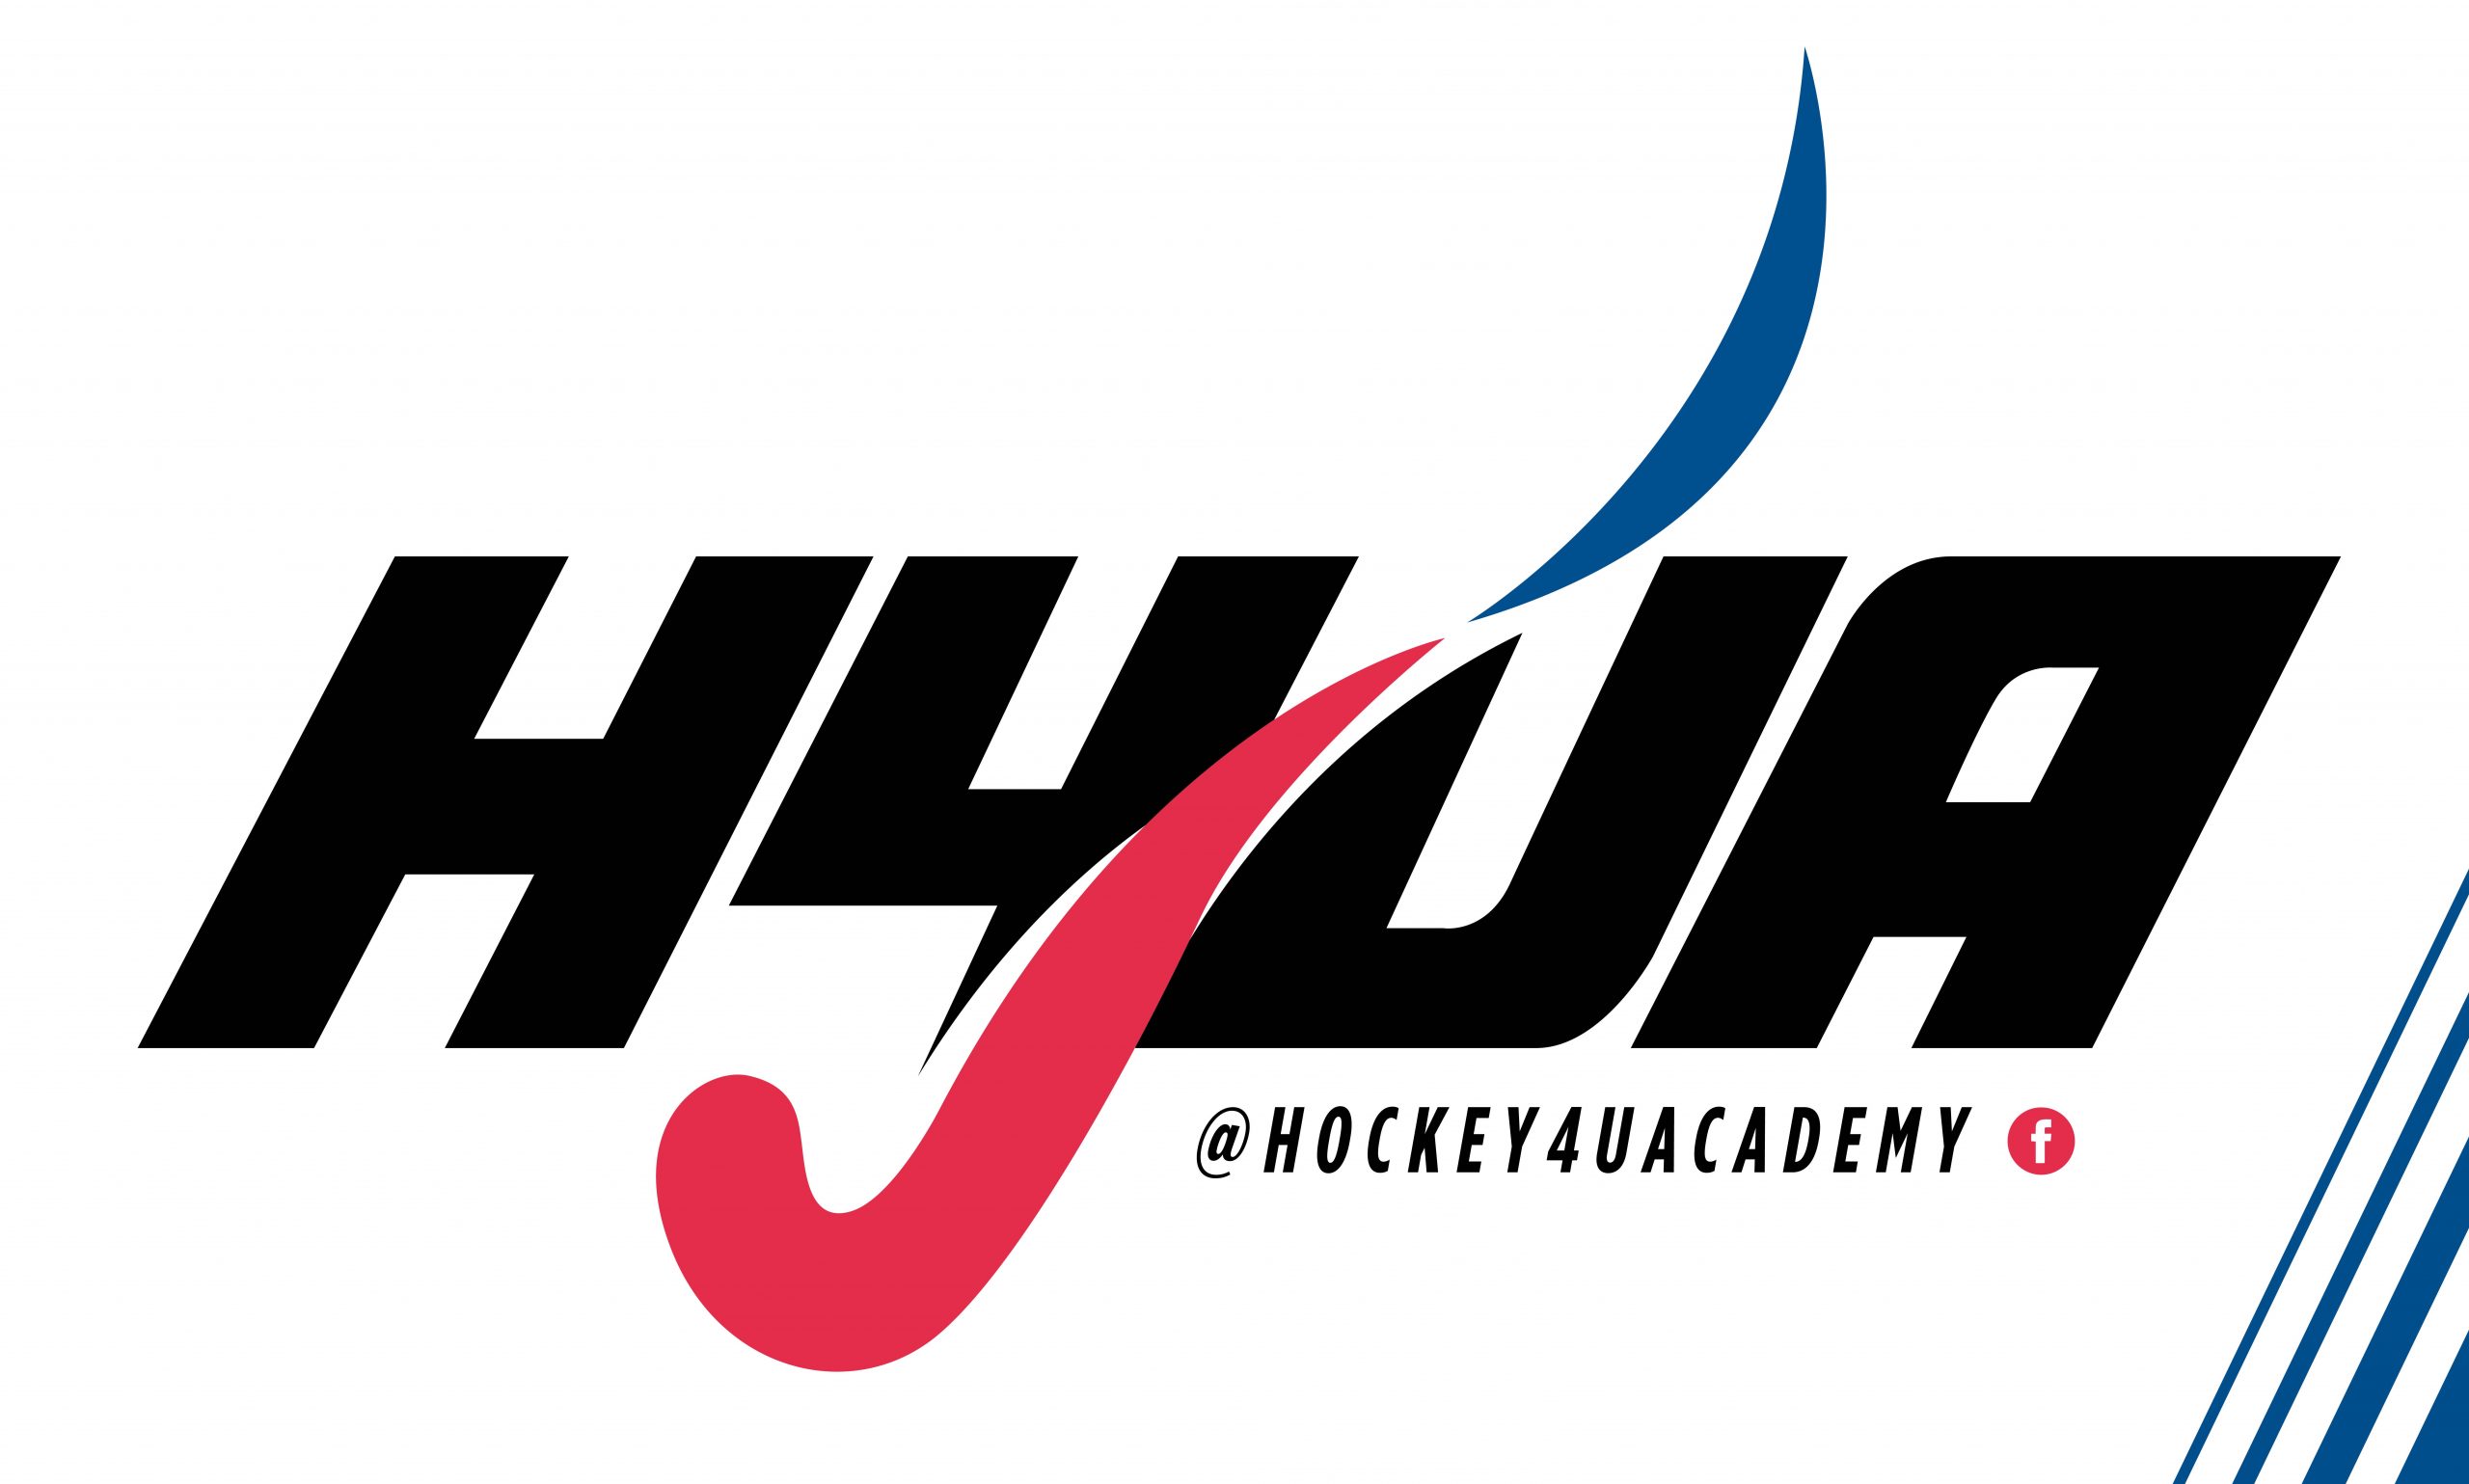 Hockey 4 U Academy